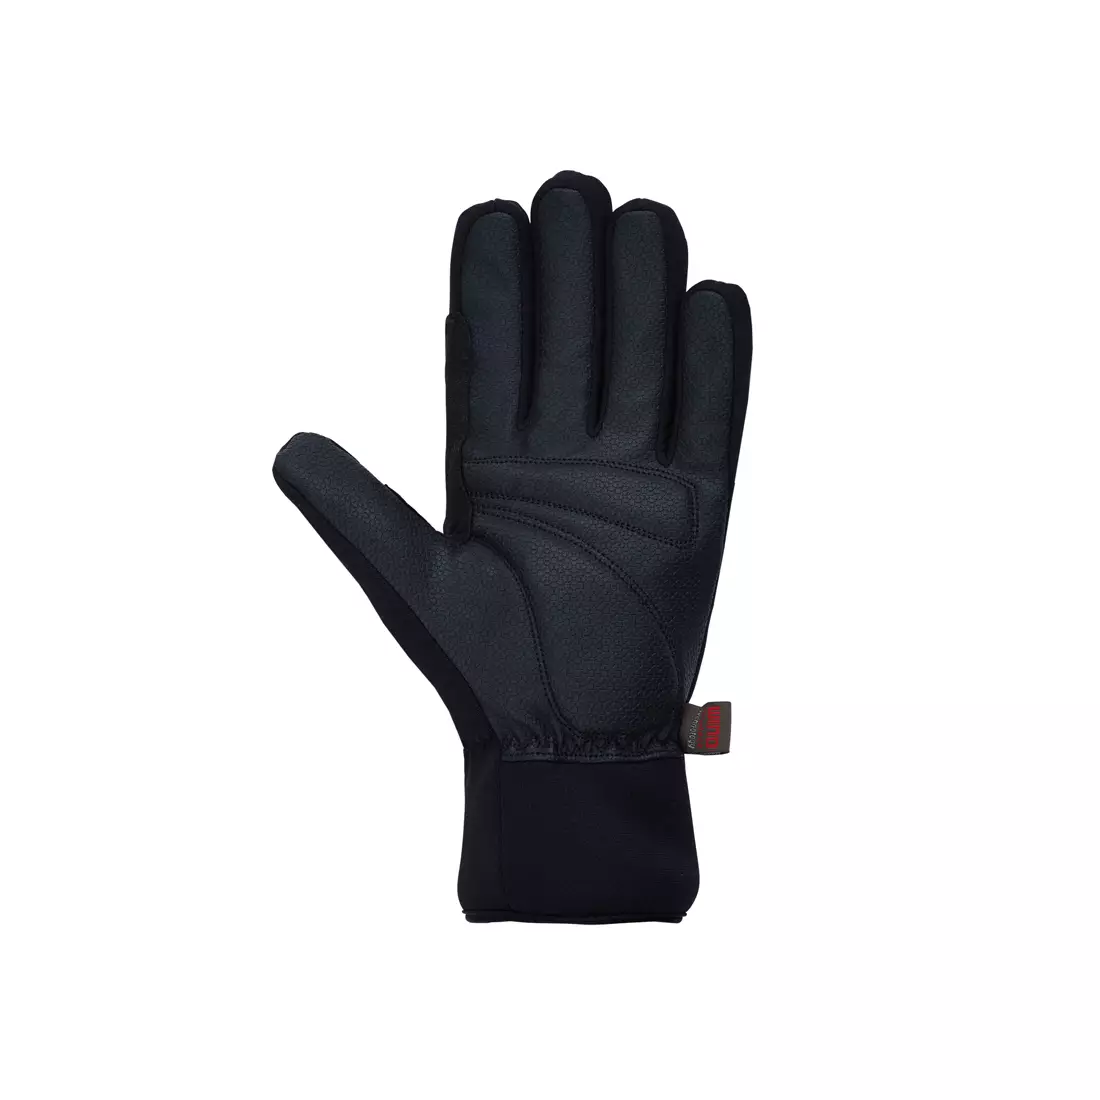 CHIBA DRY STAR SUPERLIGHT winter cycling gloves, black 31217